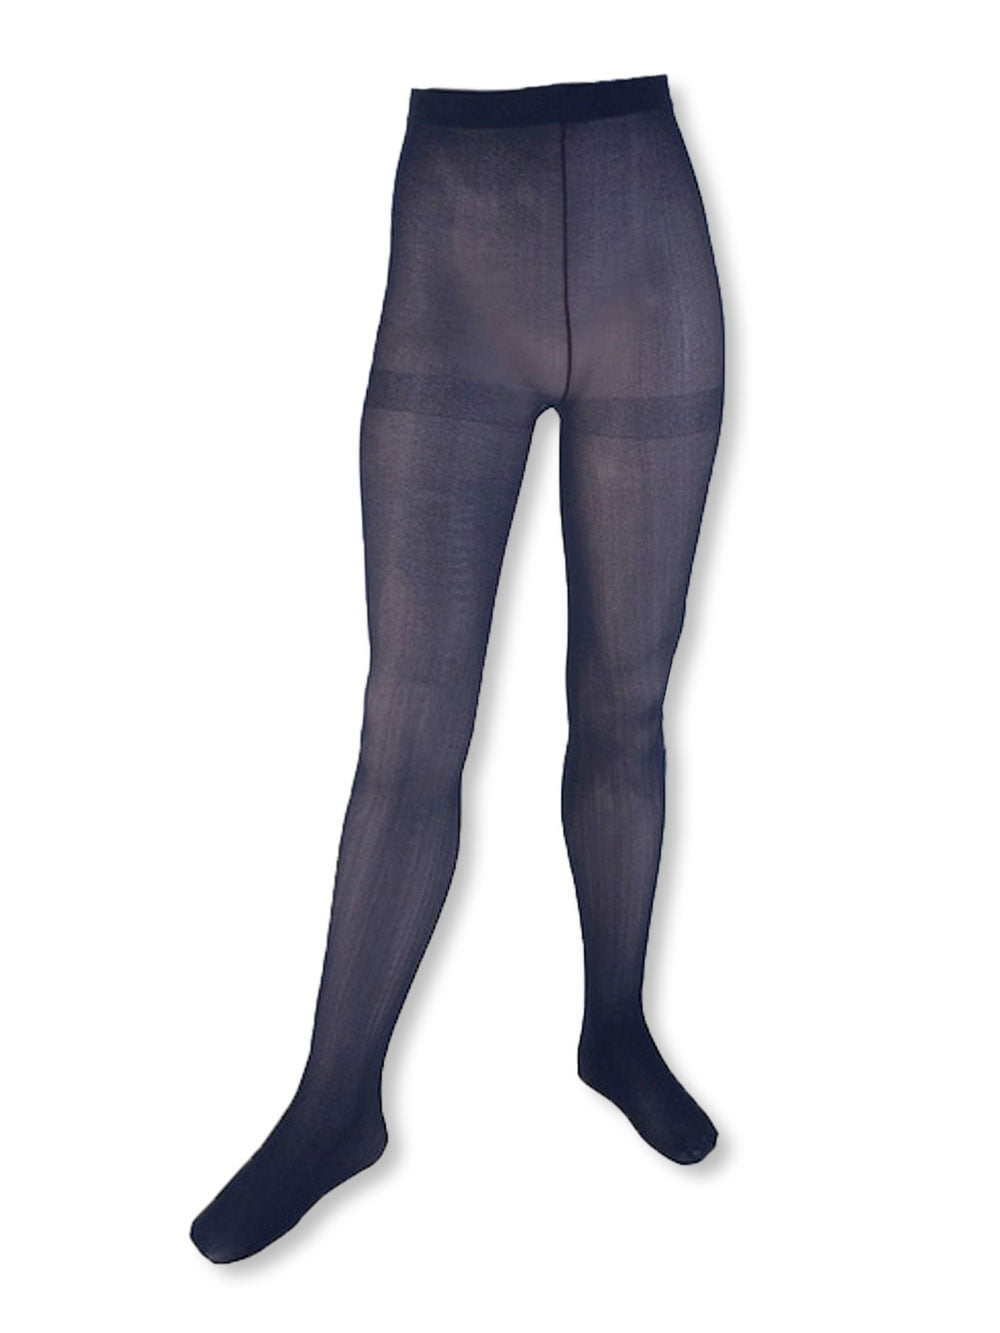 Tights 250 denier Opaque Women's Black stockings Sizes 8 10 12 14 16